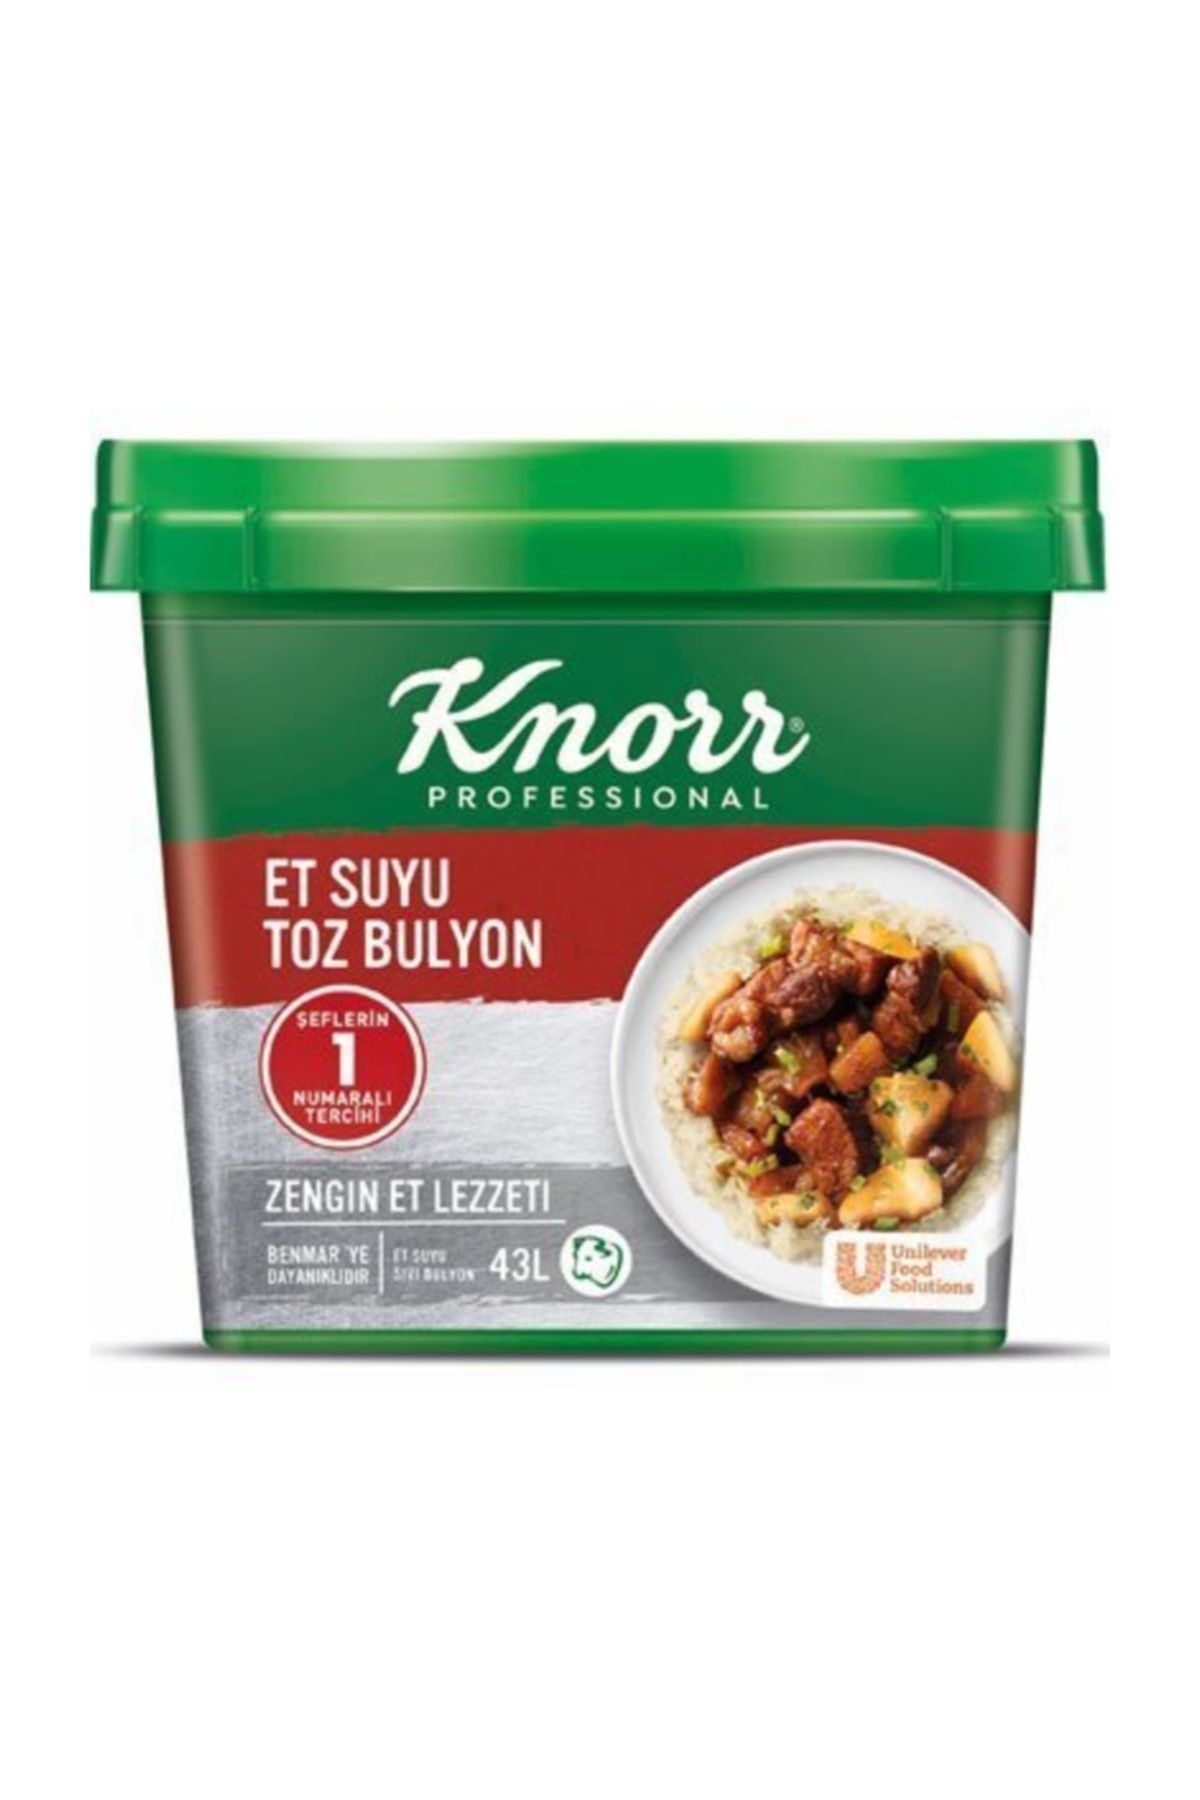 Knorr Et Suyu Toz Bulyon 750 G